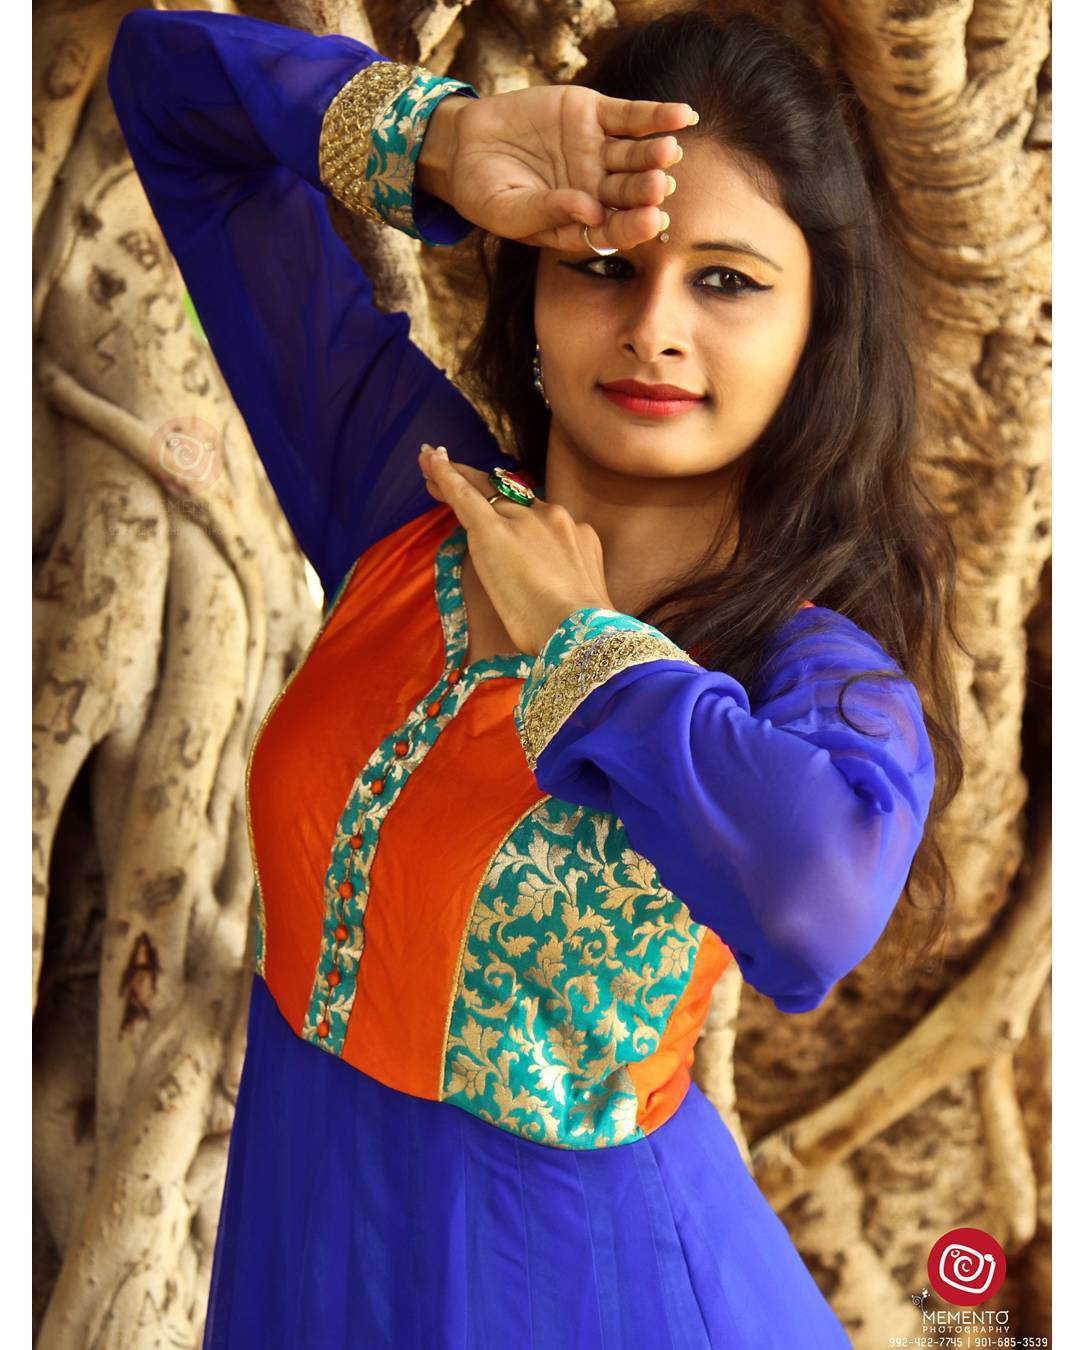 Concept Shoot. : STORY OF THE KATHAK DANCER... #kathak #kathakdance #dance #indiandance #kathakpose #picoftheday #dancepose #ahmedabad #ahmedabaddiaries #instagram_of_ahmedabad #instagram #instamood #ahmedabad_instagram #passion #blackandwhitephotography
#blackandwhite #dancer #lifeaboutdance #ahmedabaddancer #dancephotograhy
#outdoorshoot #indianfashionblogger #shootout_ahmedabad #like4like #follow #followme
#DipsPhotography #MementoPhotography